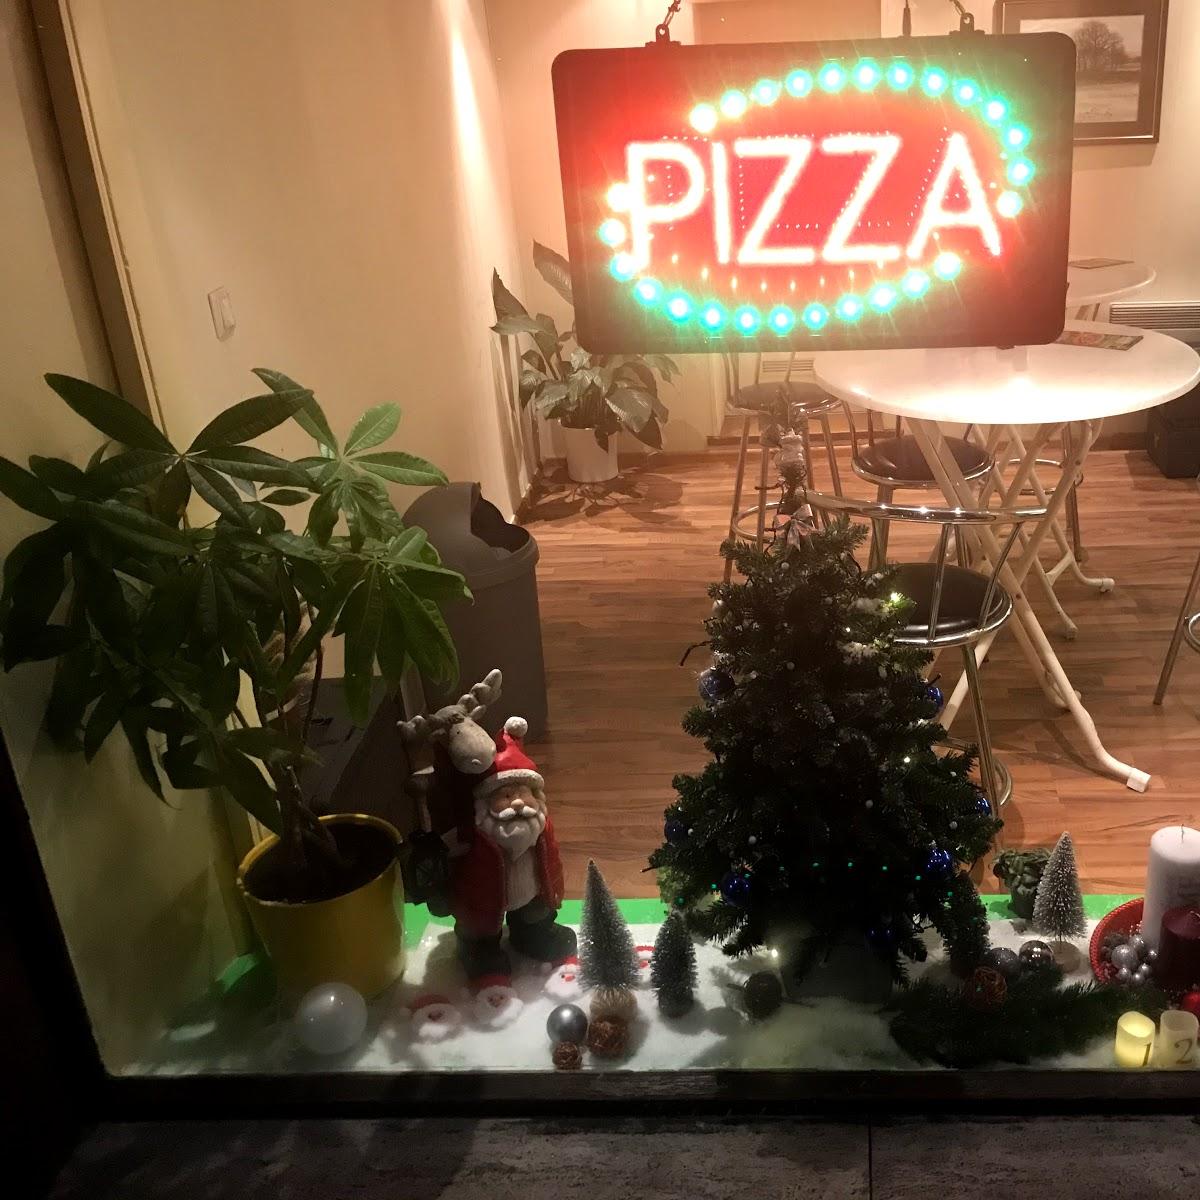 Restaurant "Pizza Flora -" in Heidelberg